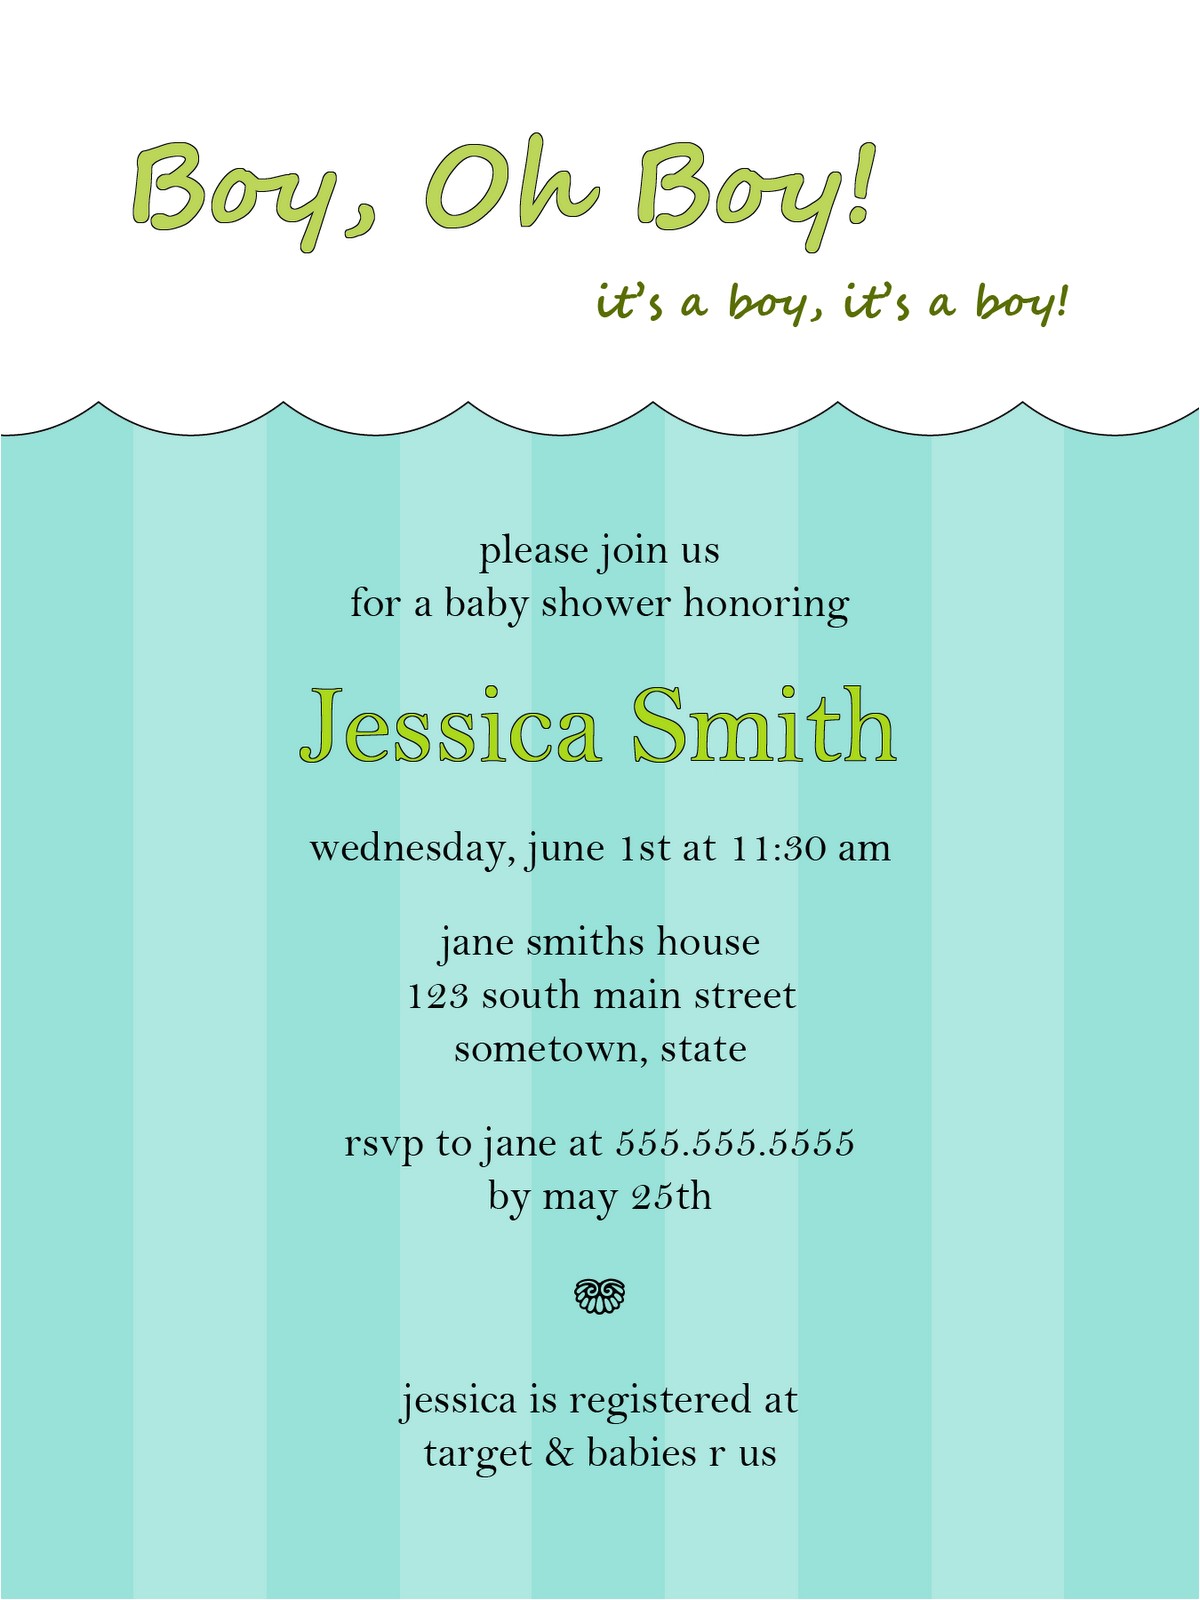 Free Customizable Baby Shower Invitations Free Baby Shower Invitations Templates for Boys